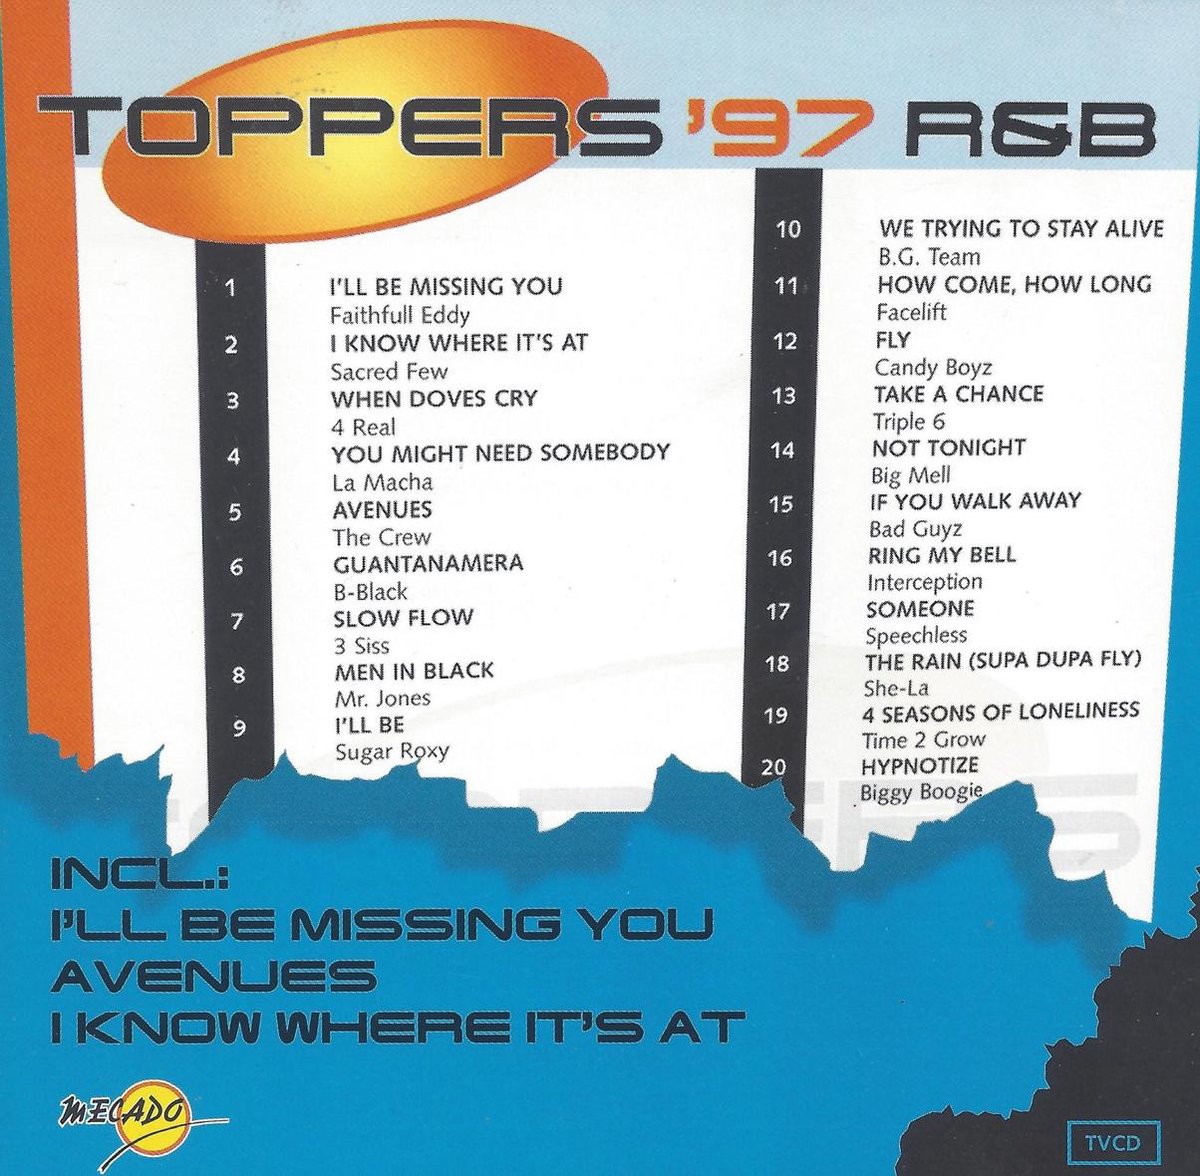 Toppers '97 R&B (Mecado)